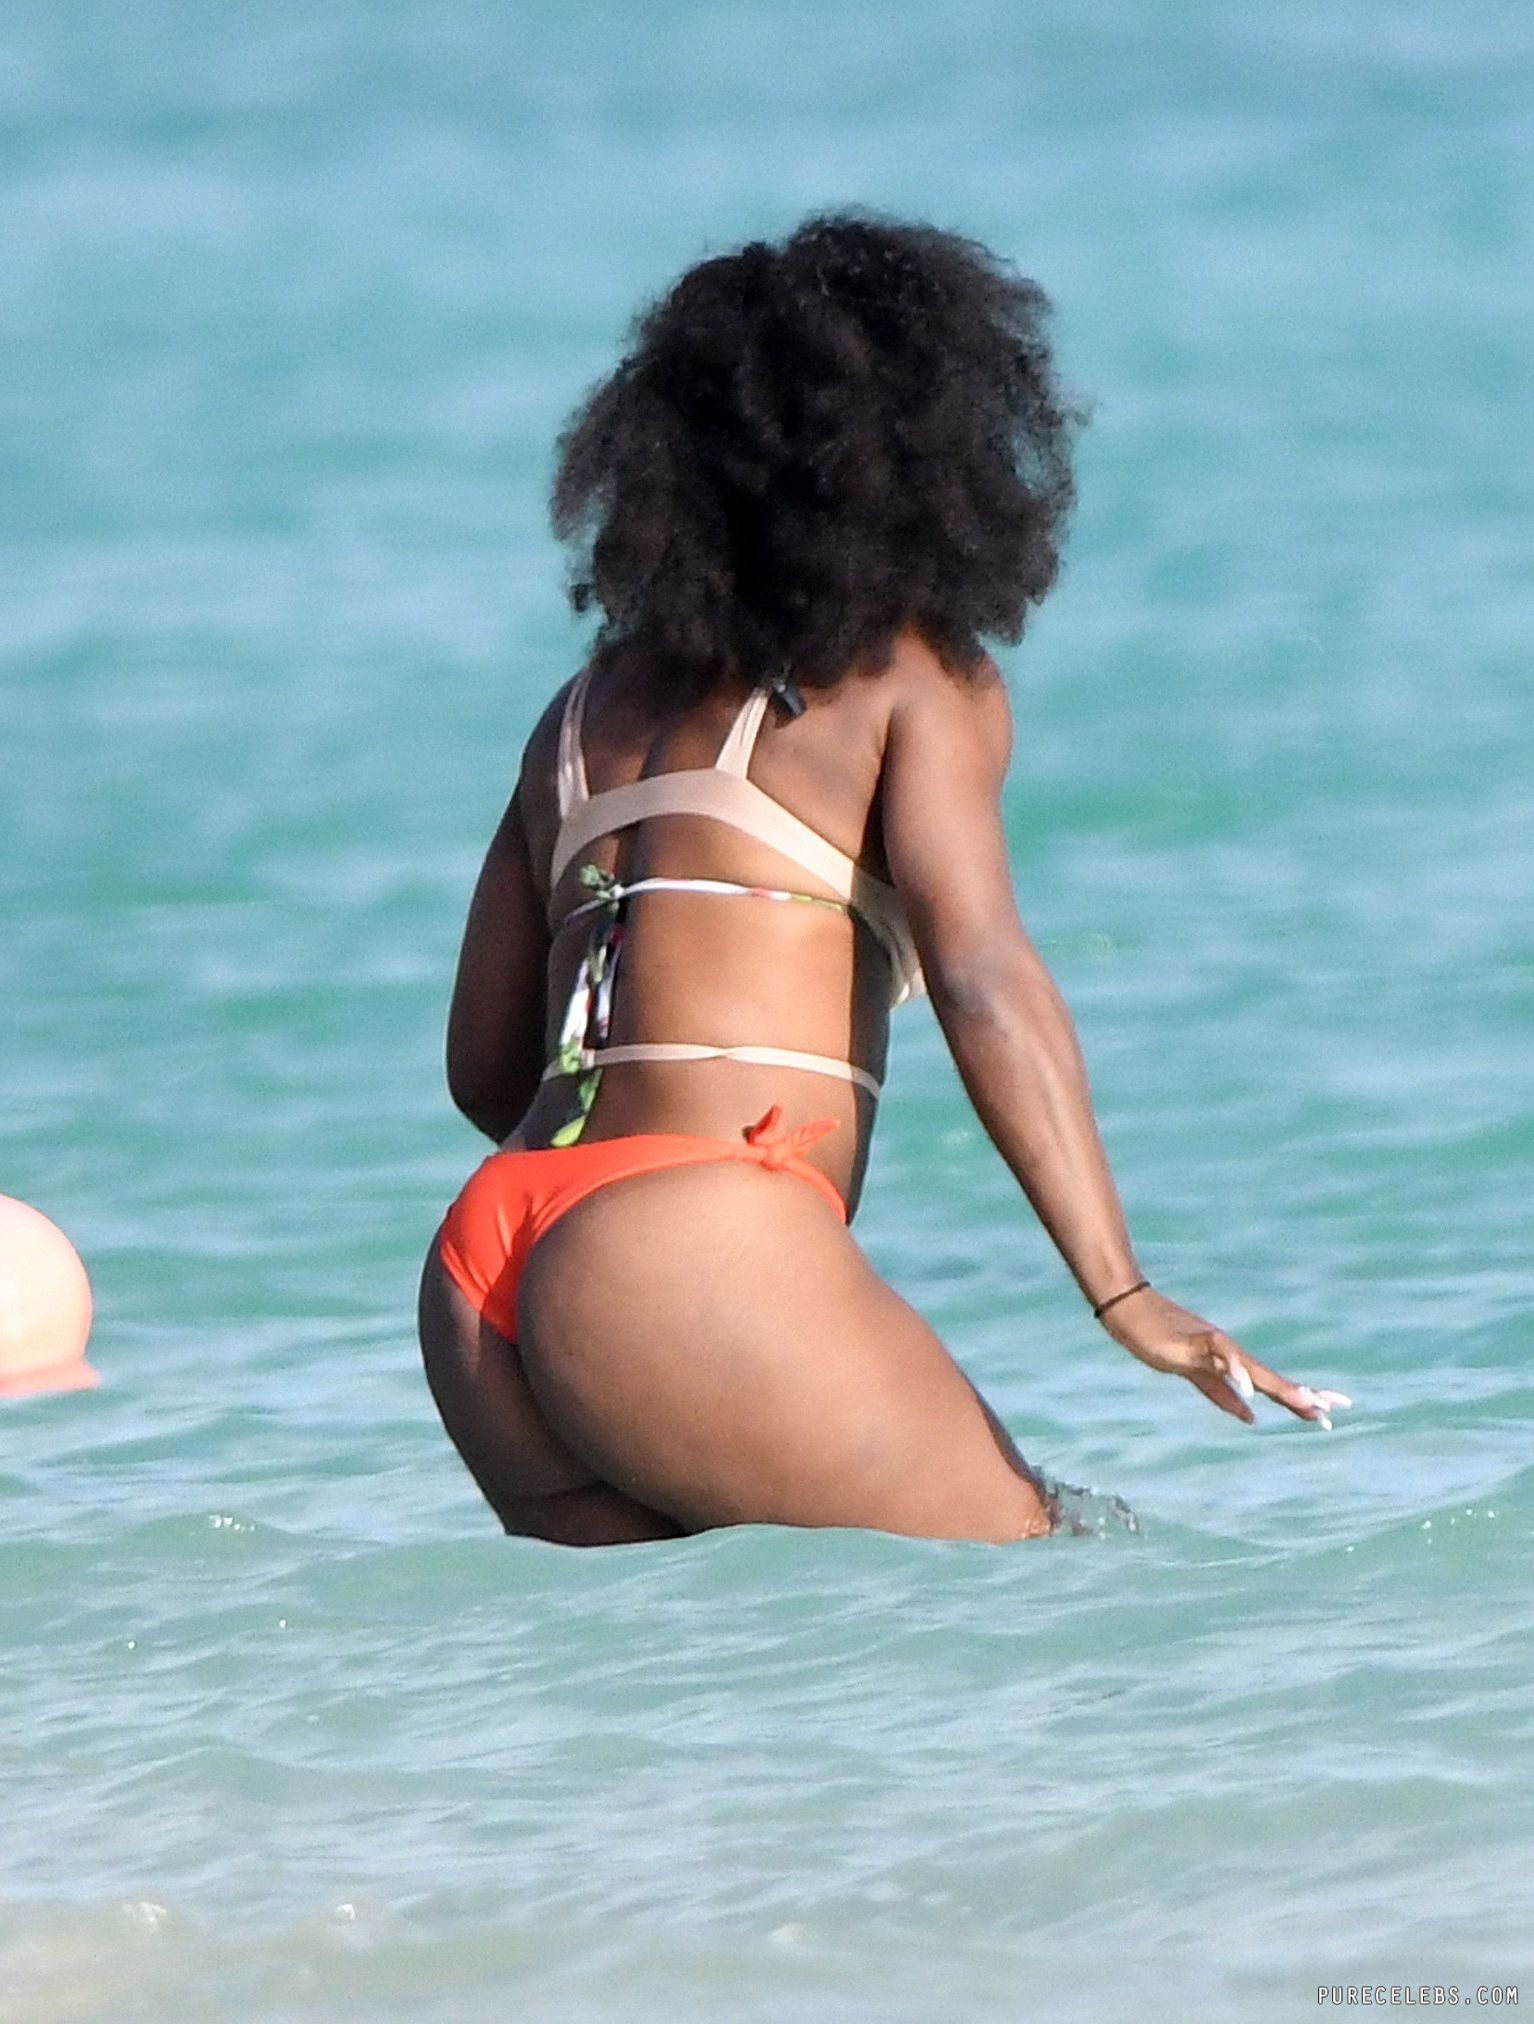 Serena Williams Caught By Paparazzi Flashing Her Massive Butts In Bikini - NuCelebs.com